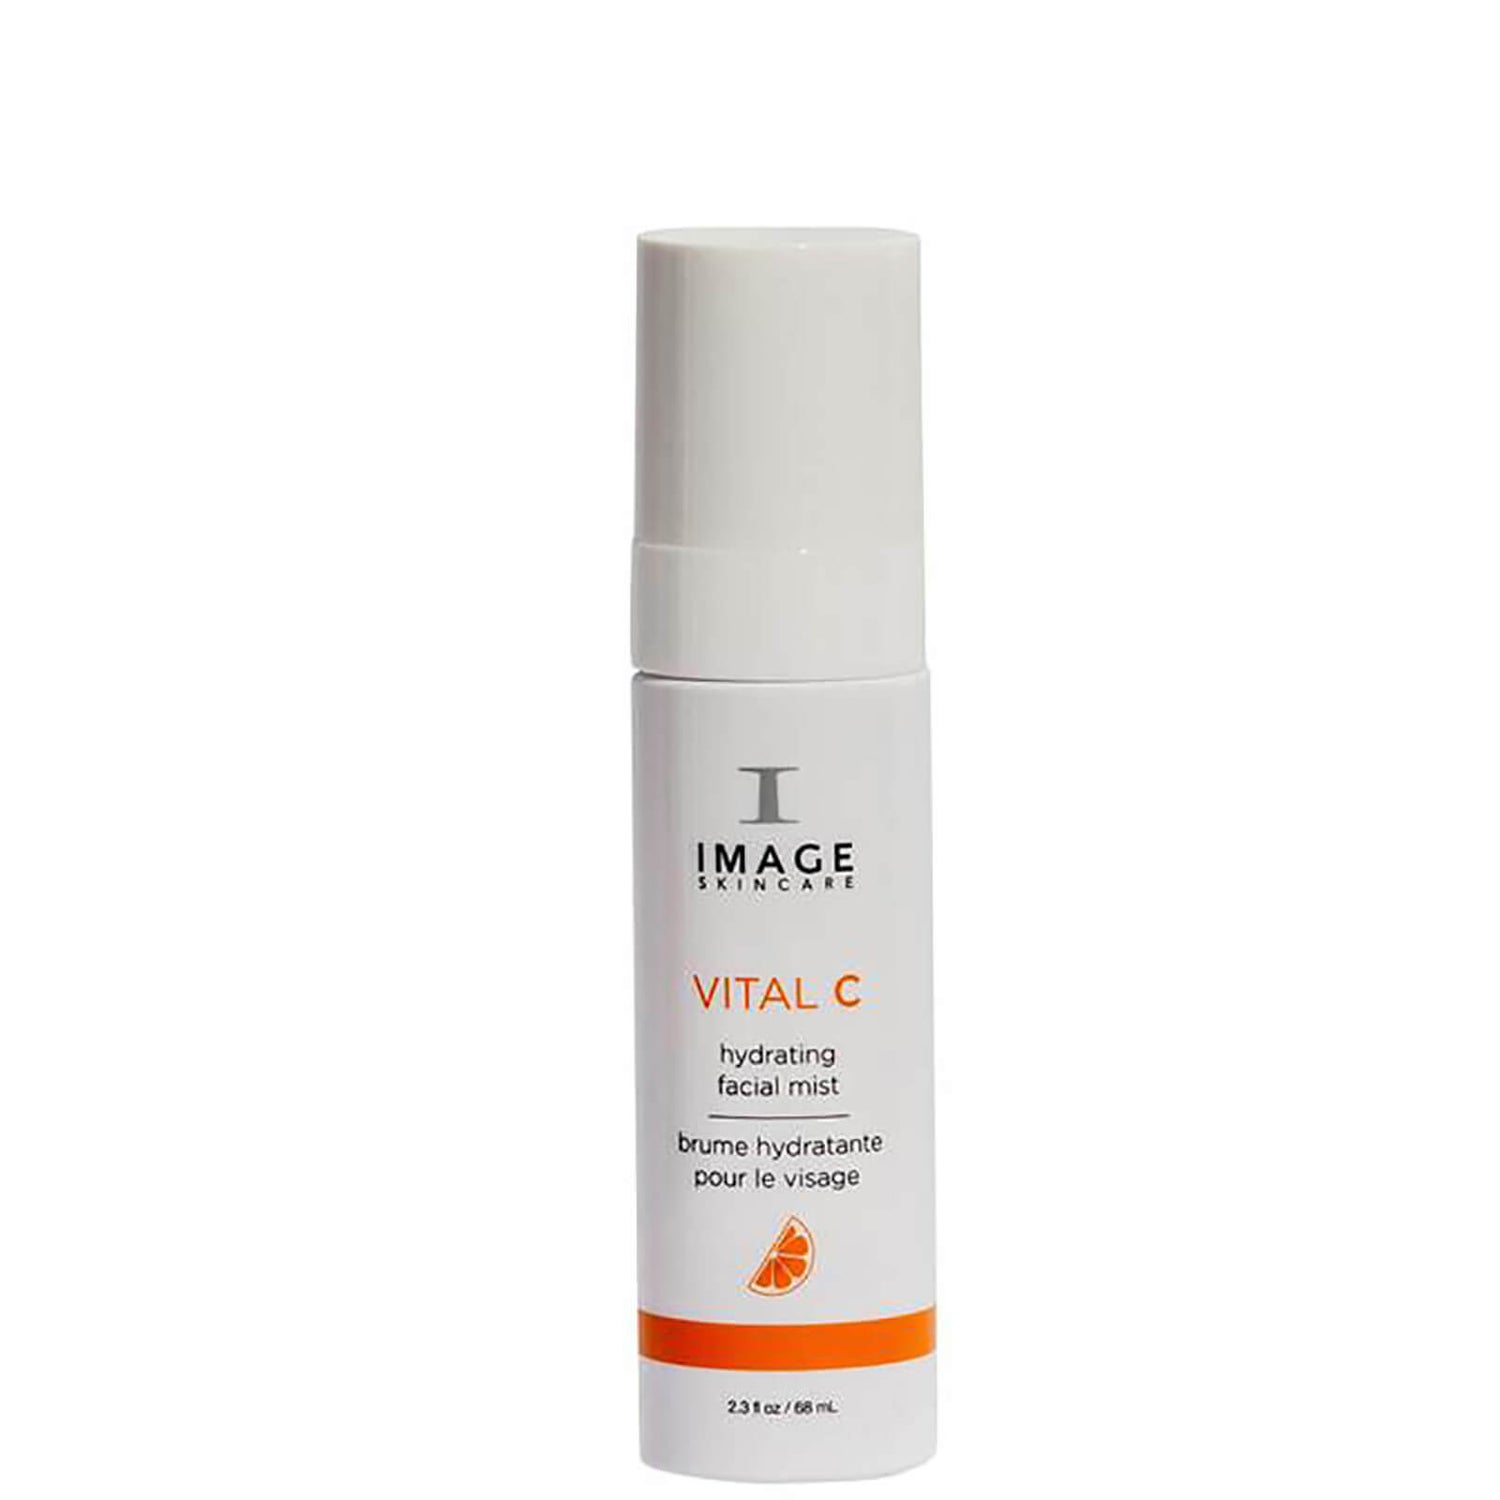 IMAGE Skincare VITAL C Hydrating Facial Mist 2.3 fl. oz.